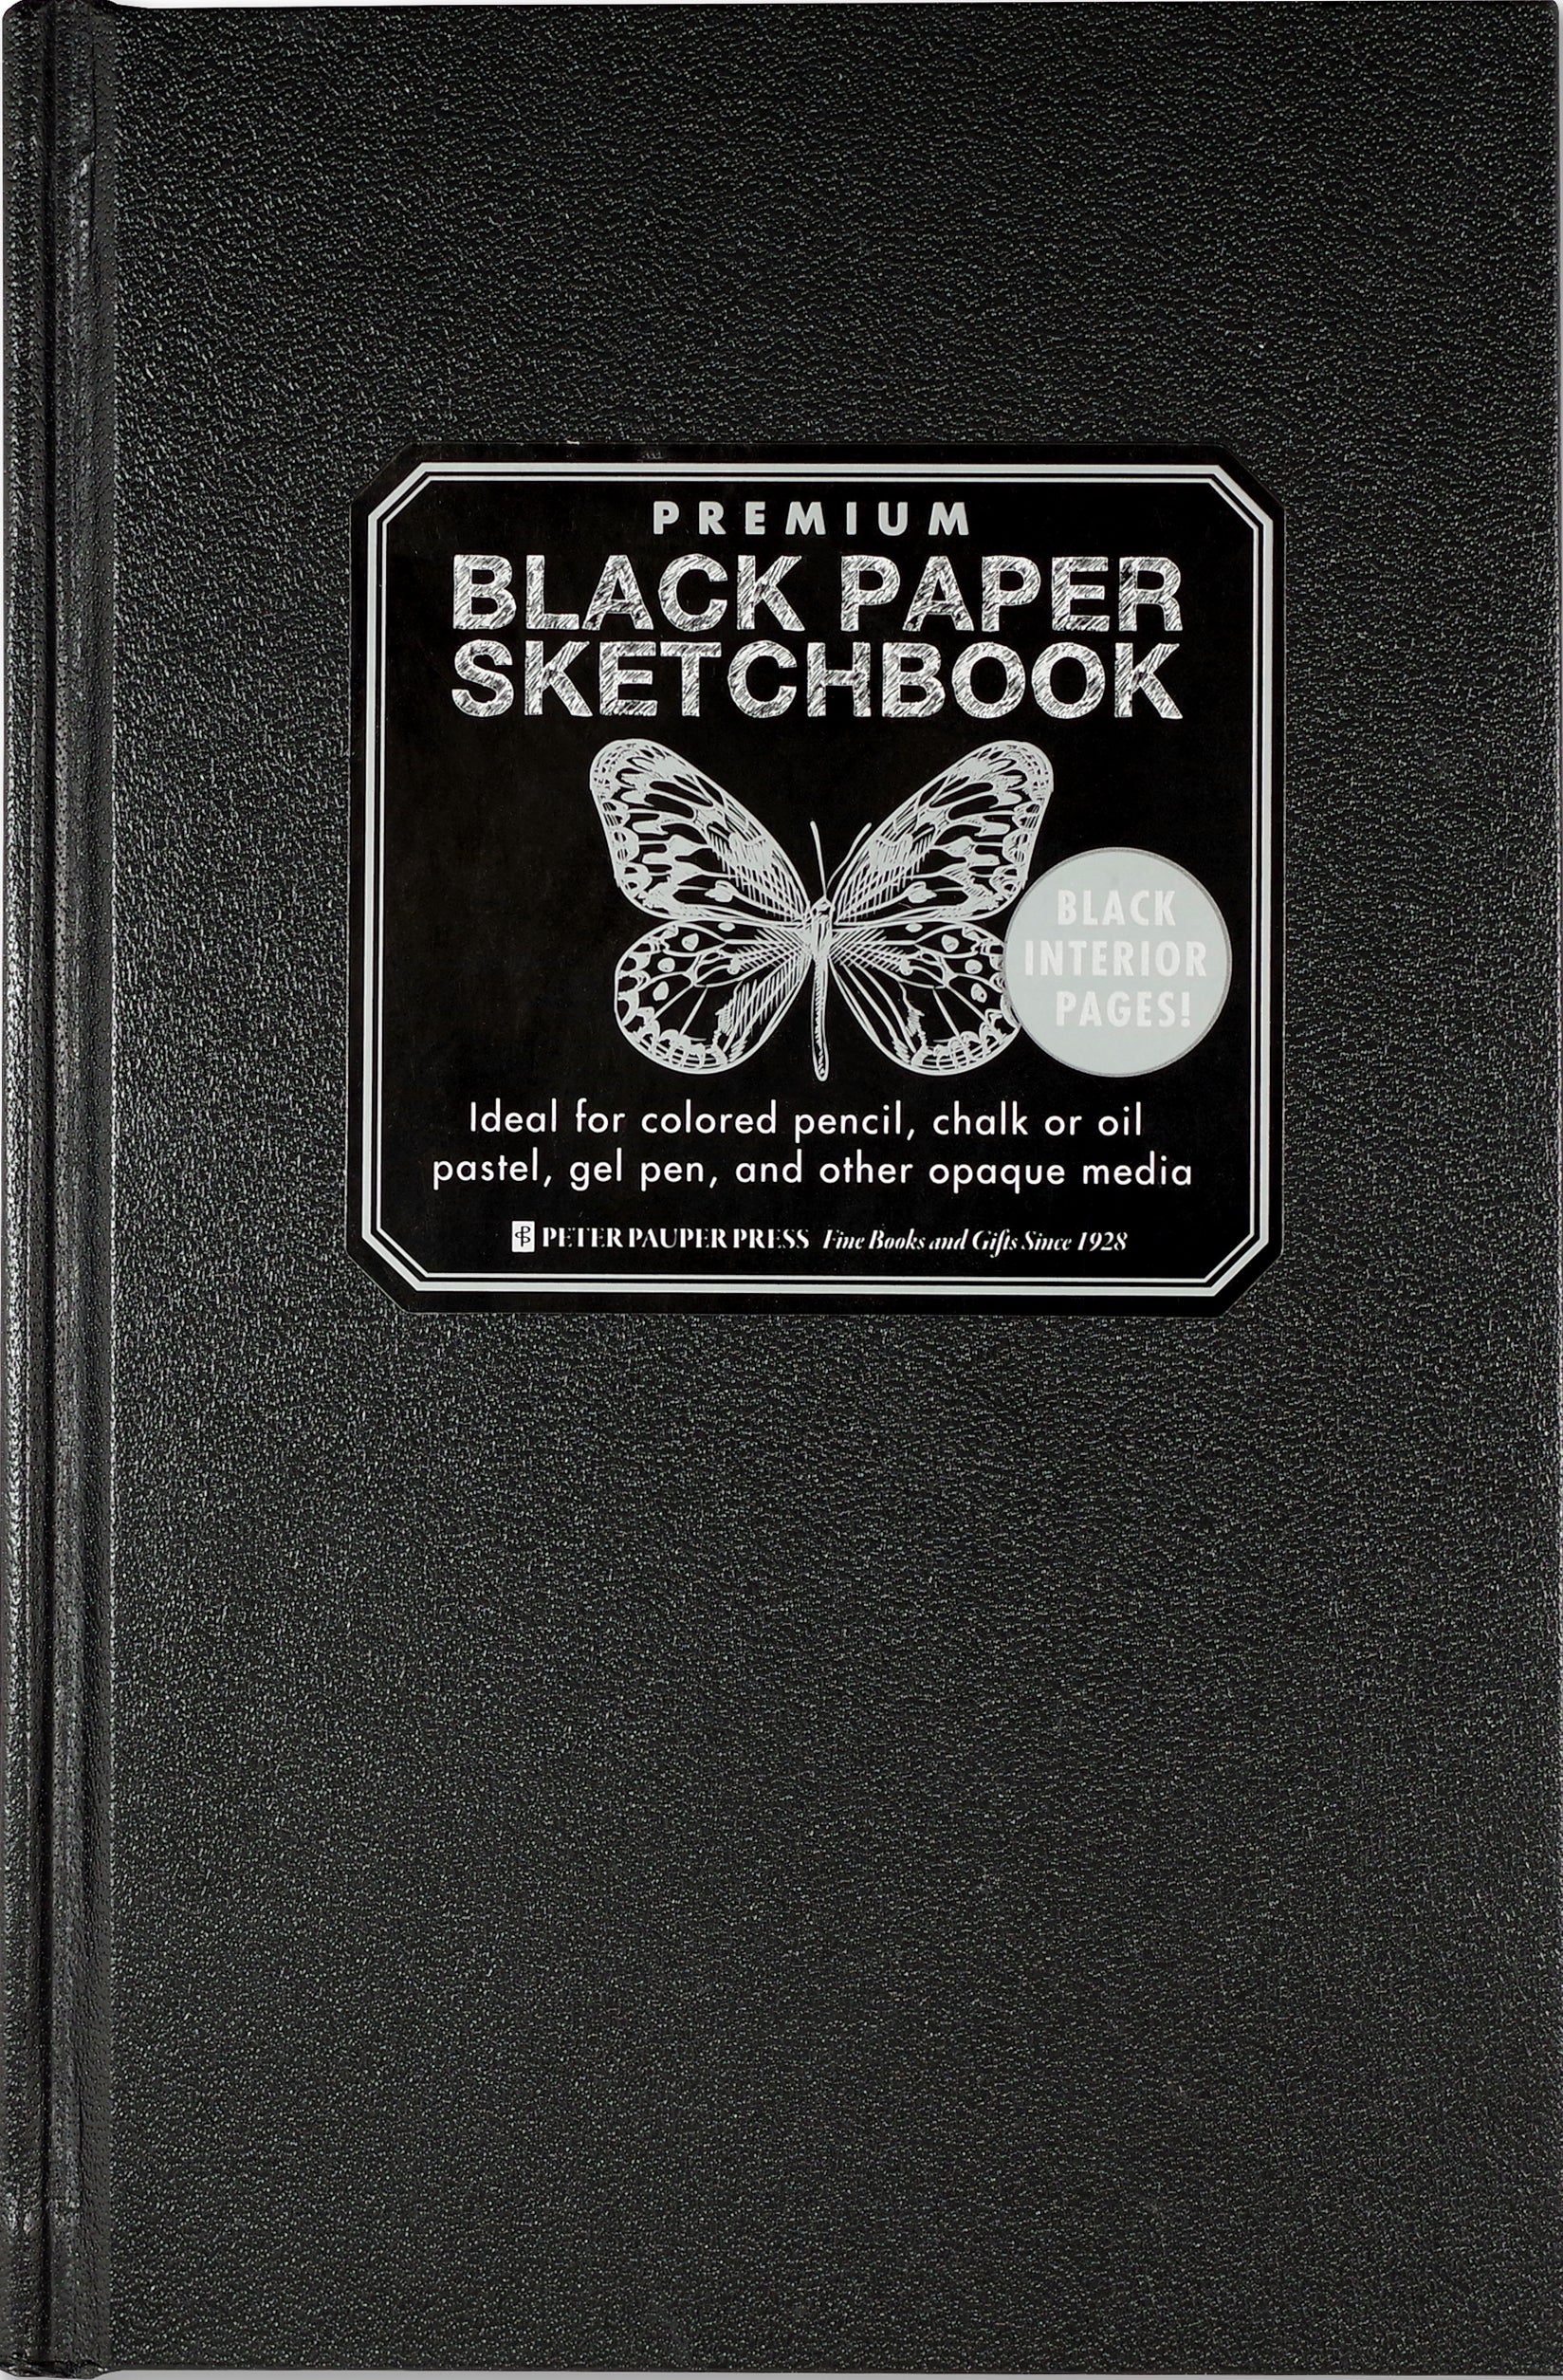 Field Sketchbook A6